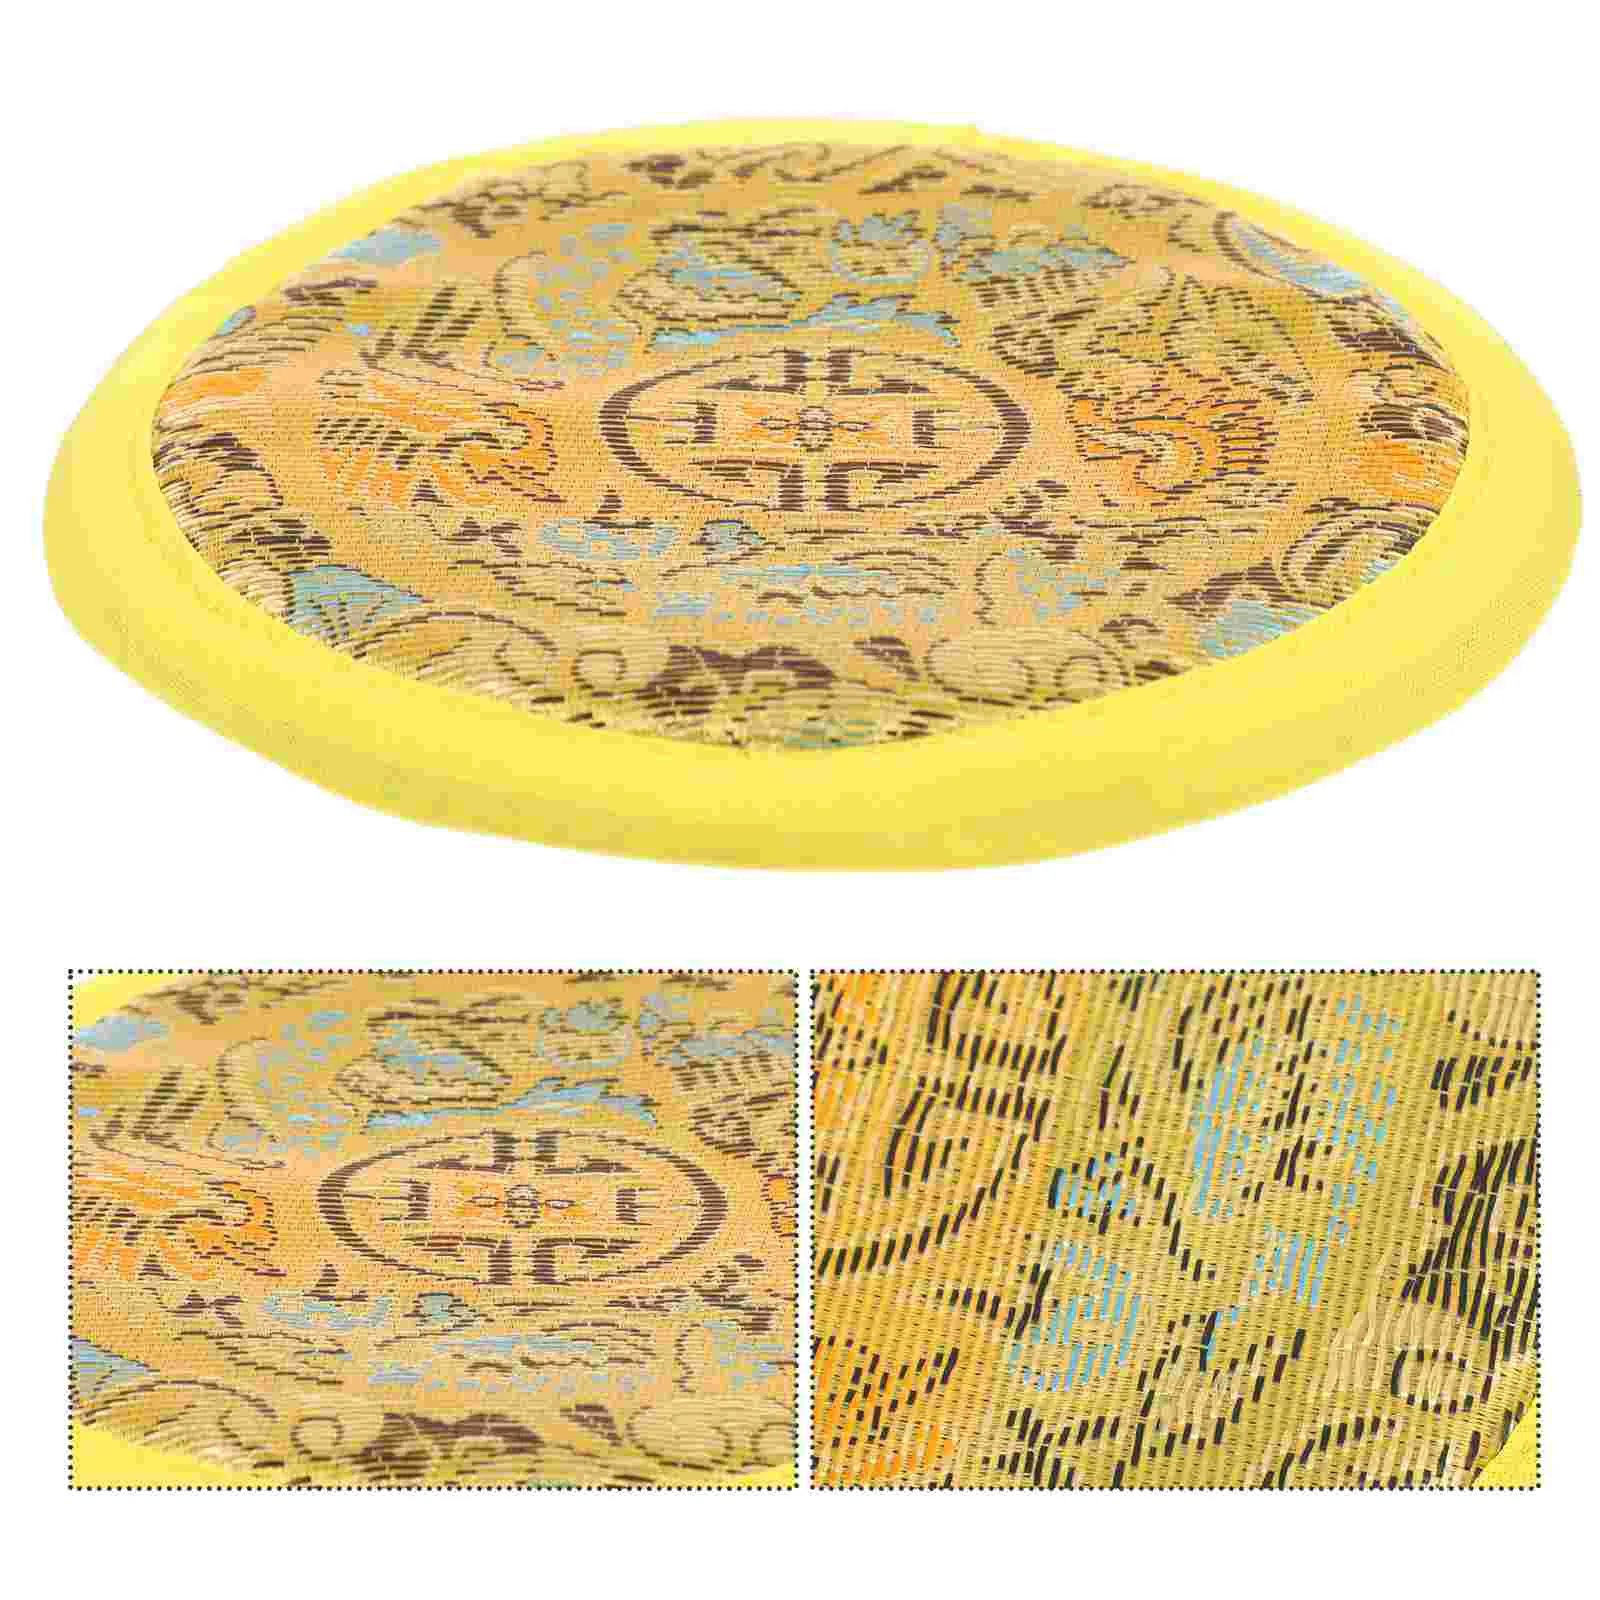 

Sound Bowl Pad Meditation Bowl Accessories Sound Bowl Embroidery Pad Round Cushion Religious Cushion Tibetan Singing Bowl Pillow